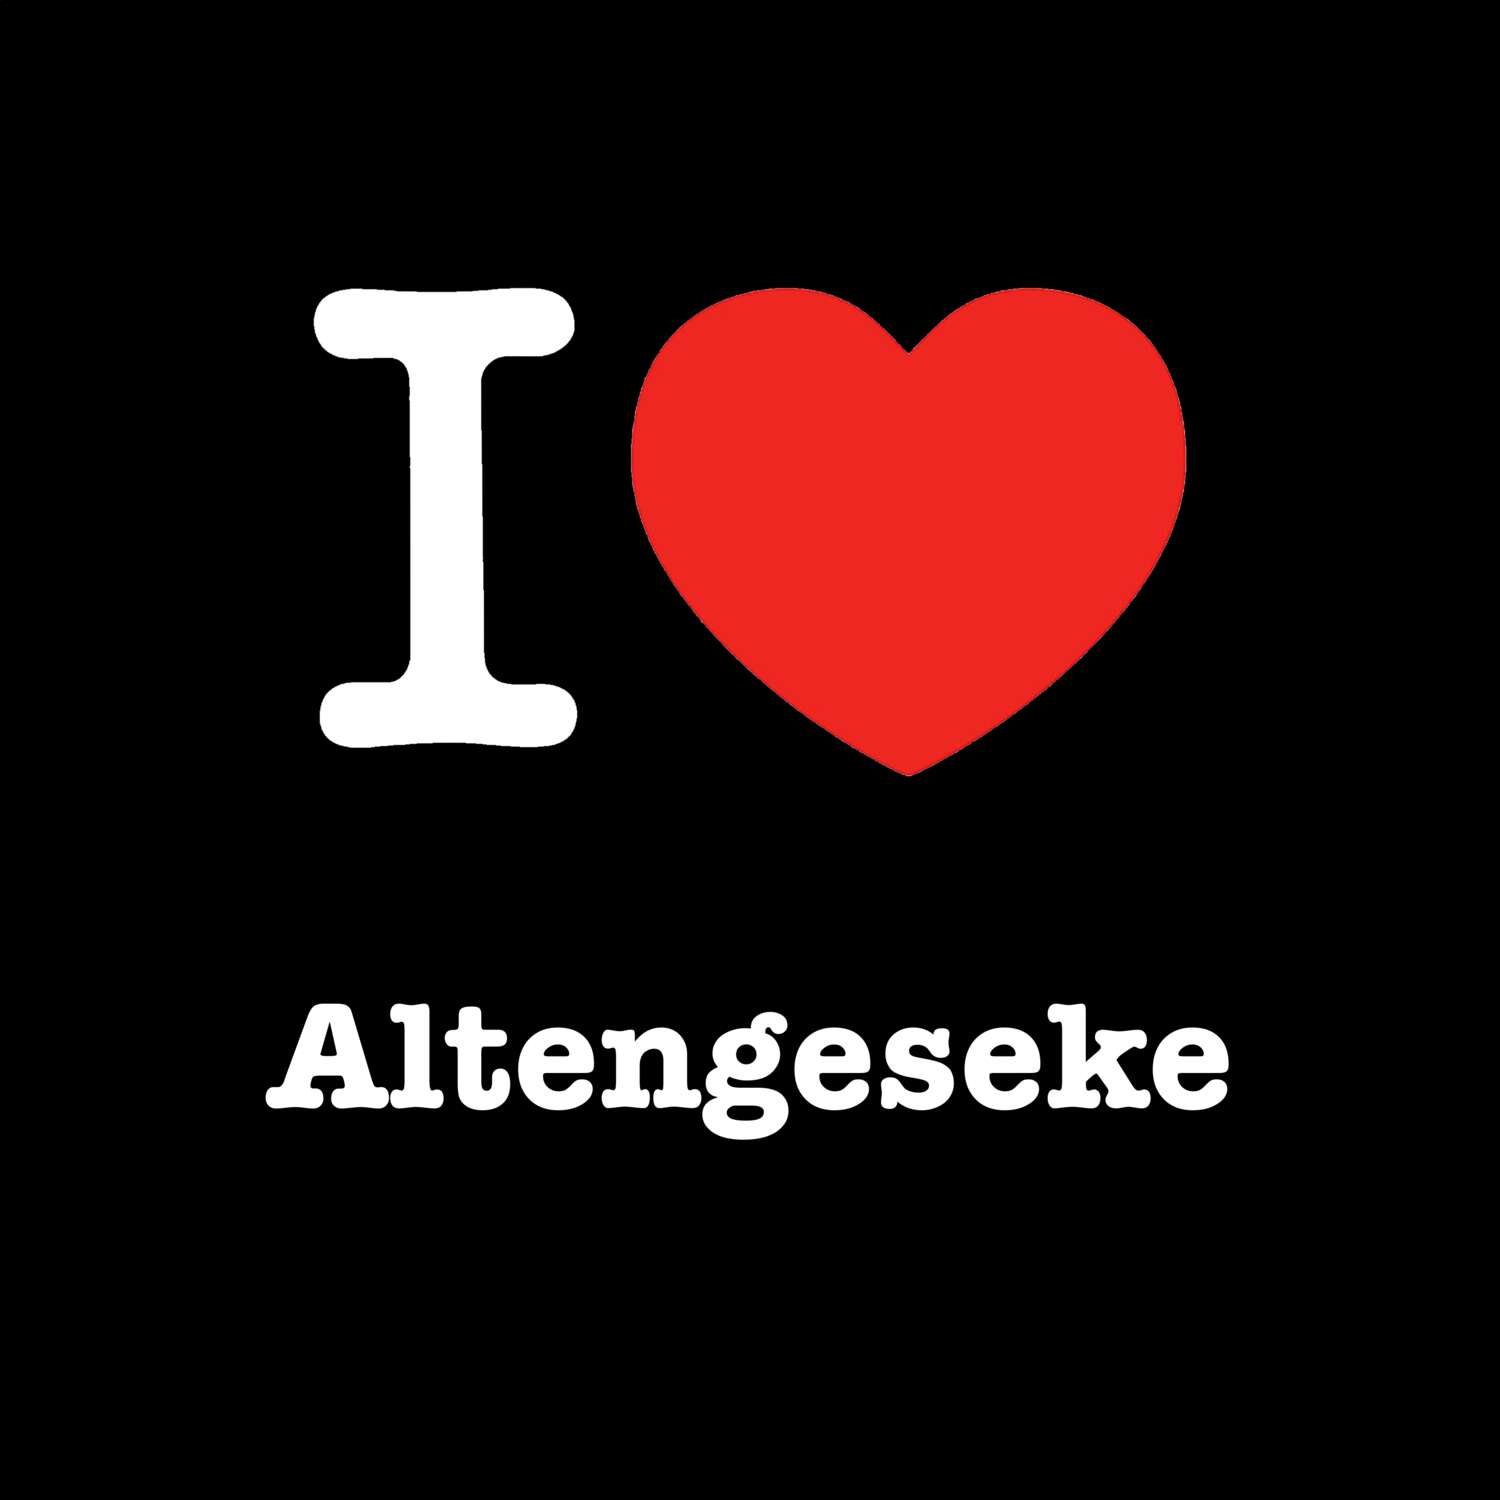 Altengeseke T-Shirt »I love«